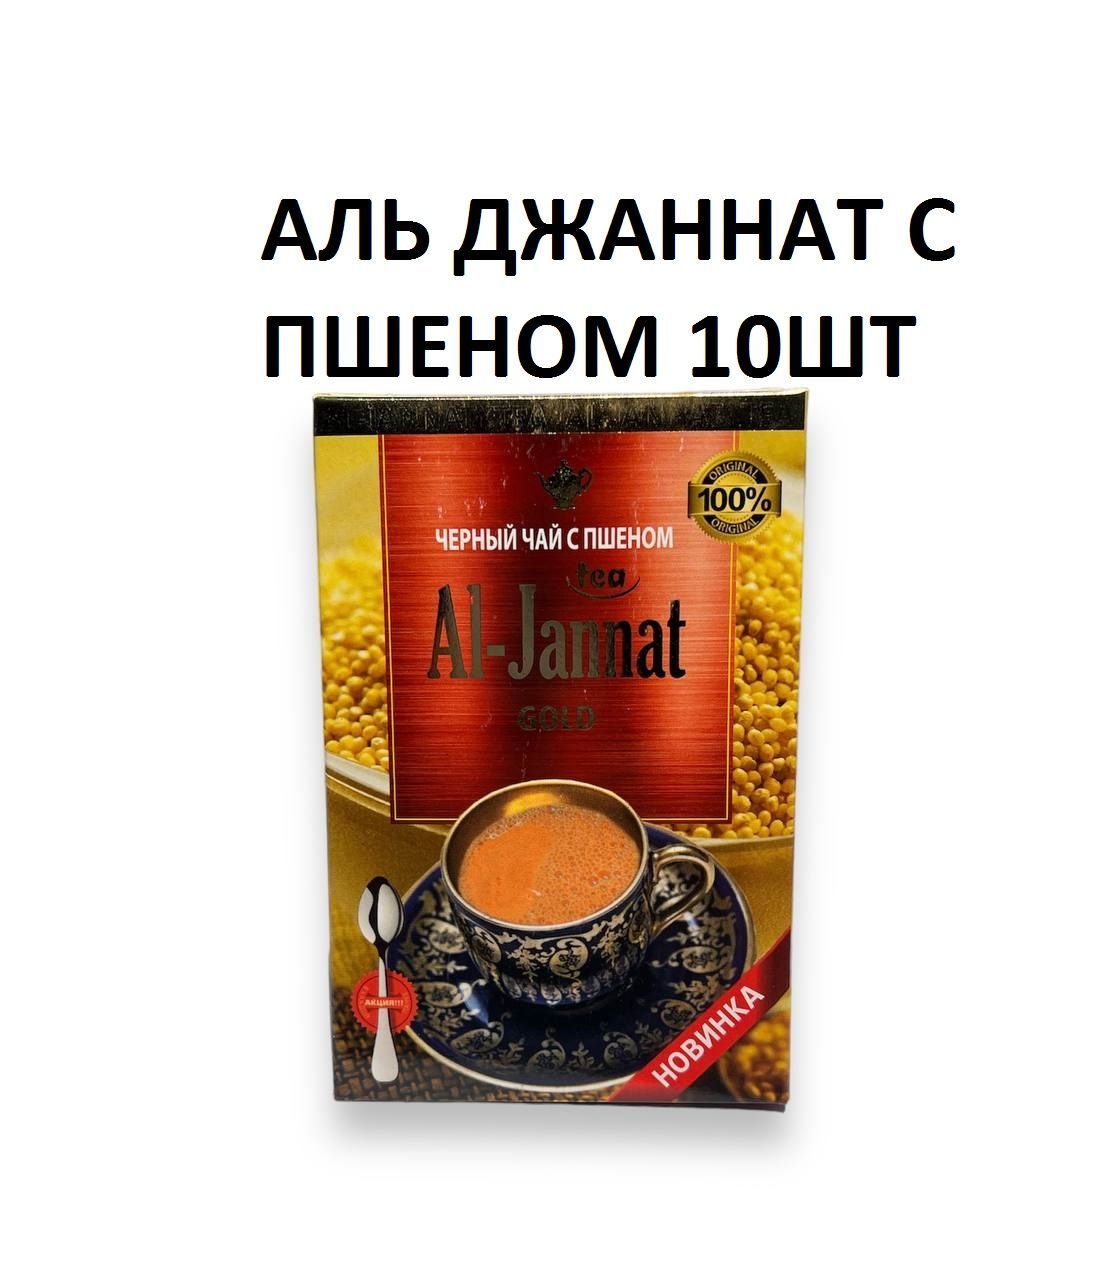 Чай аль джаннат